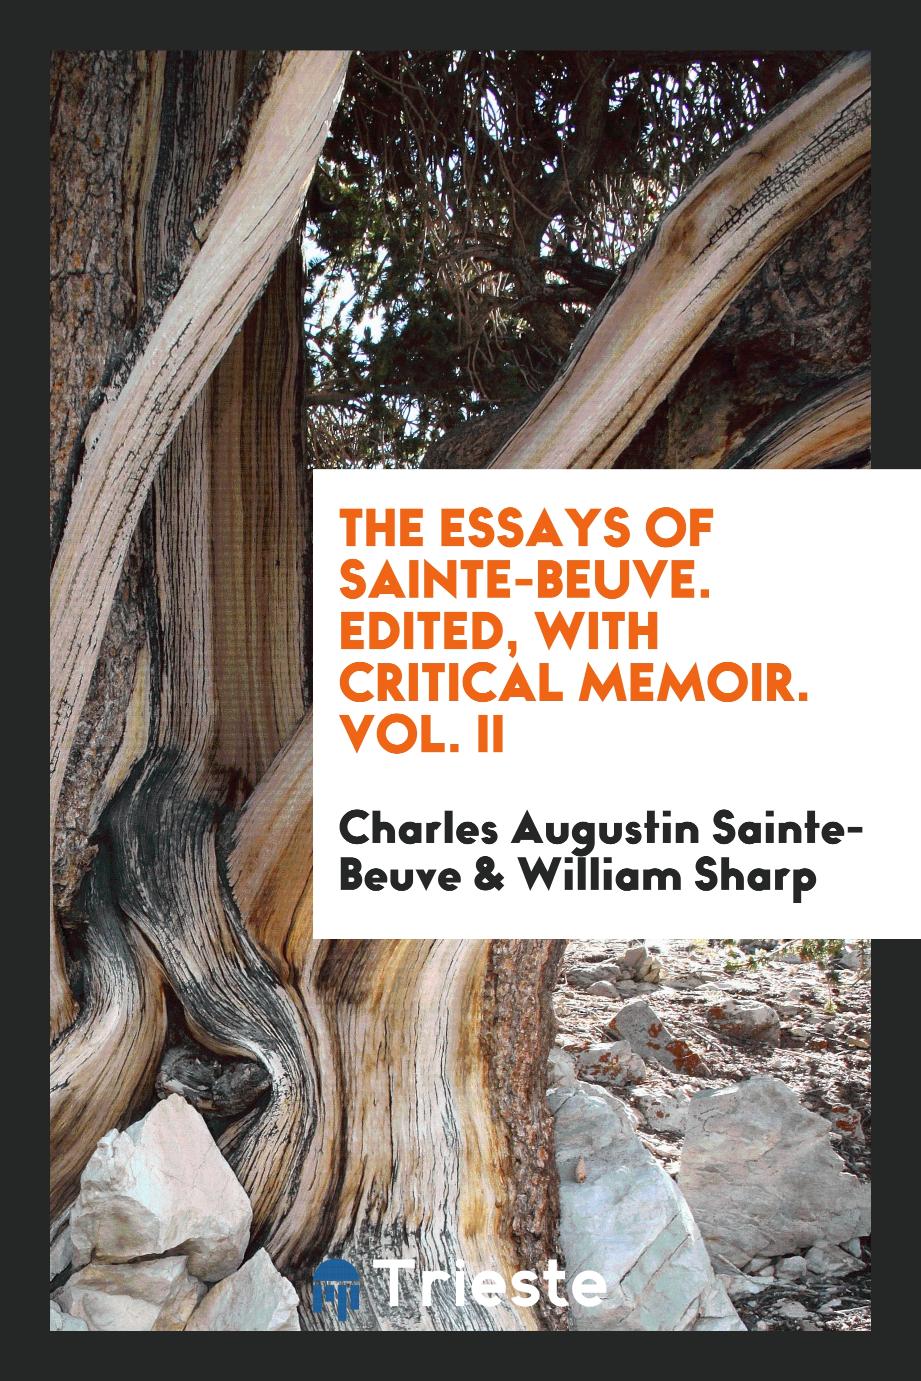 The essays of Sainte-Beuve. Edited, with critical memoir. Vol. II